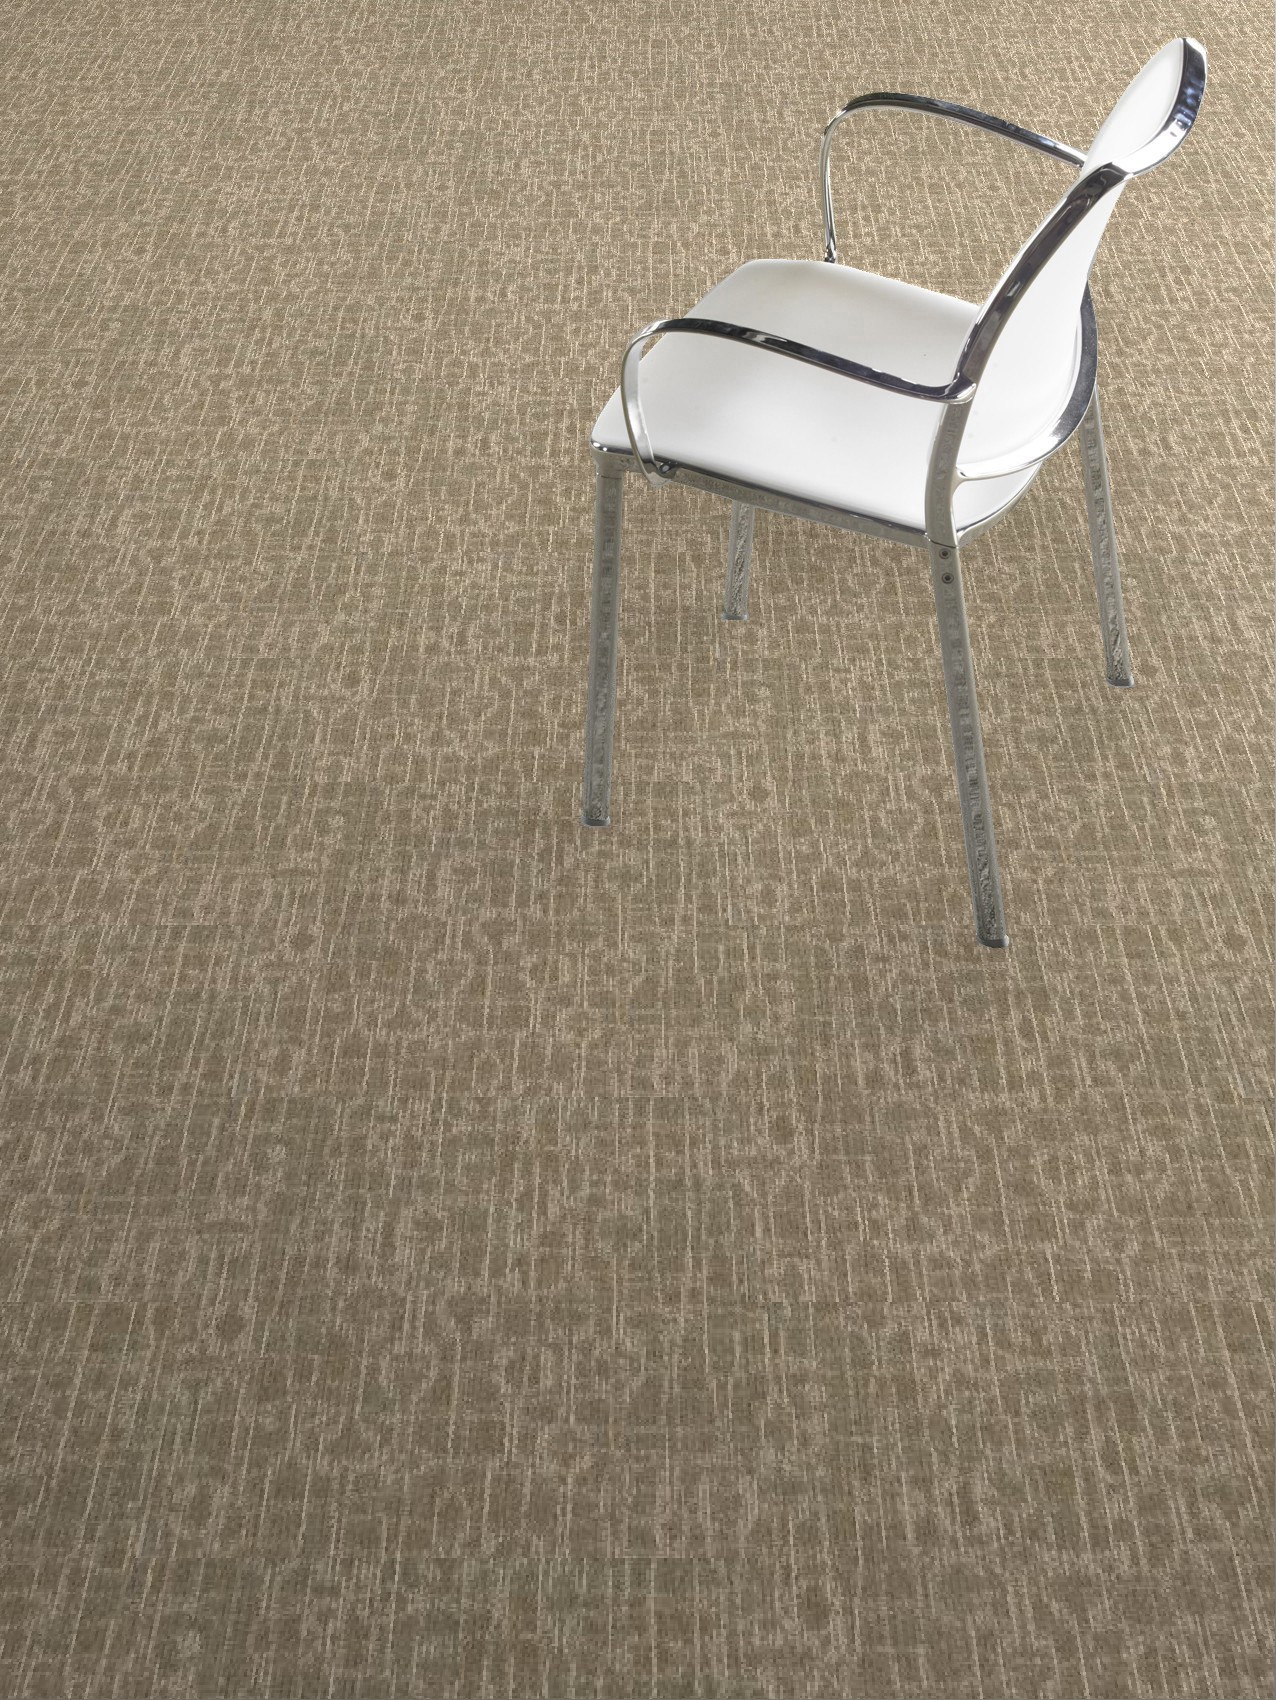 Shaw carpet | Budget Flooring, Inc.